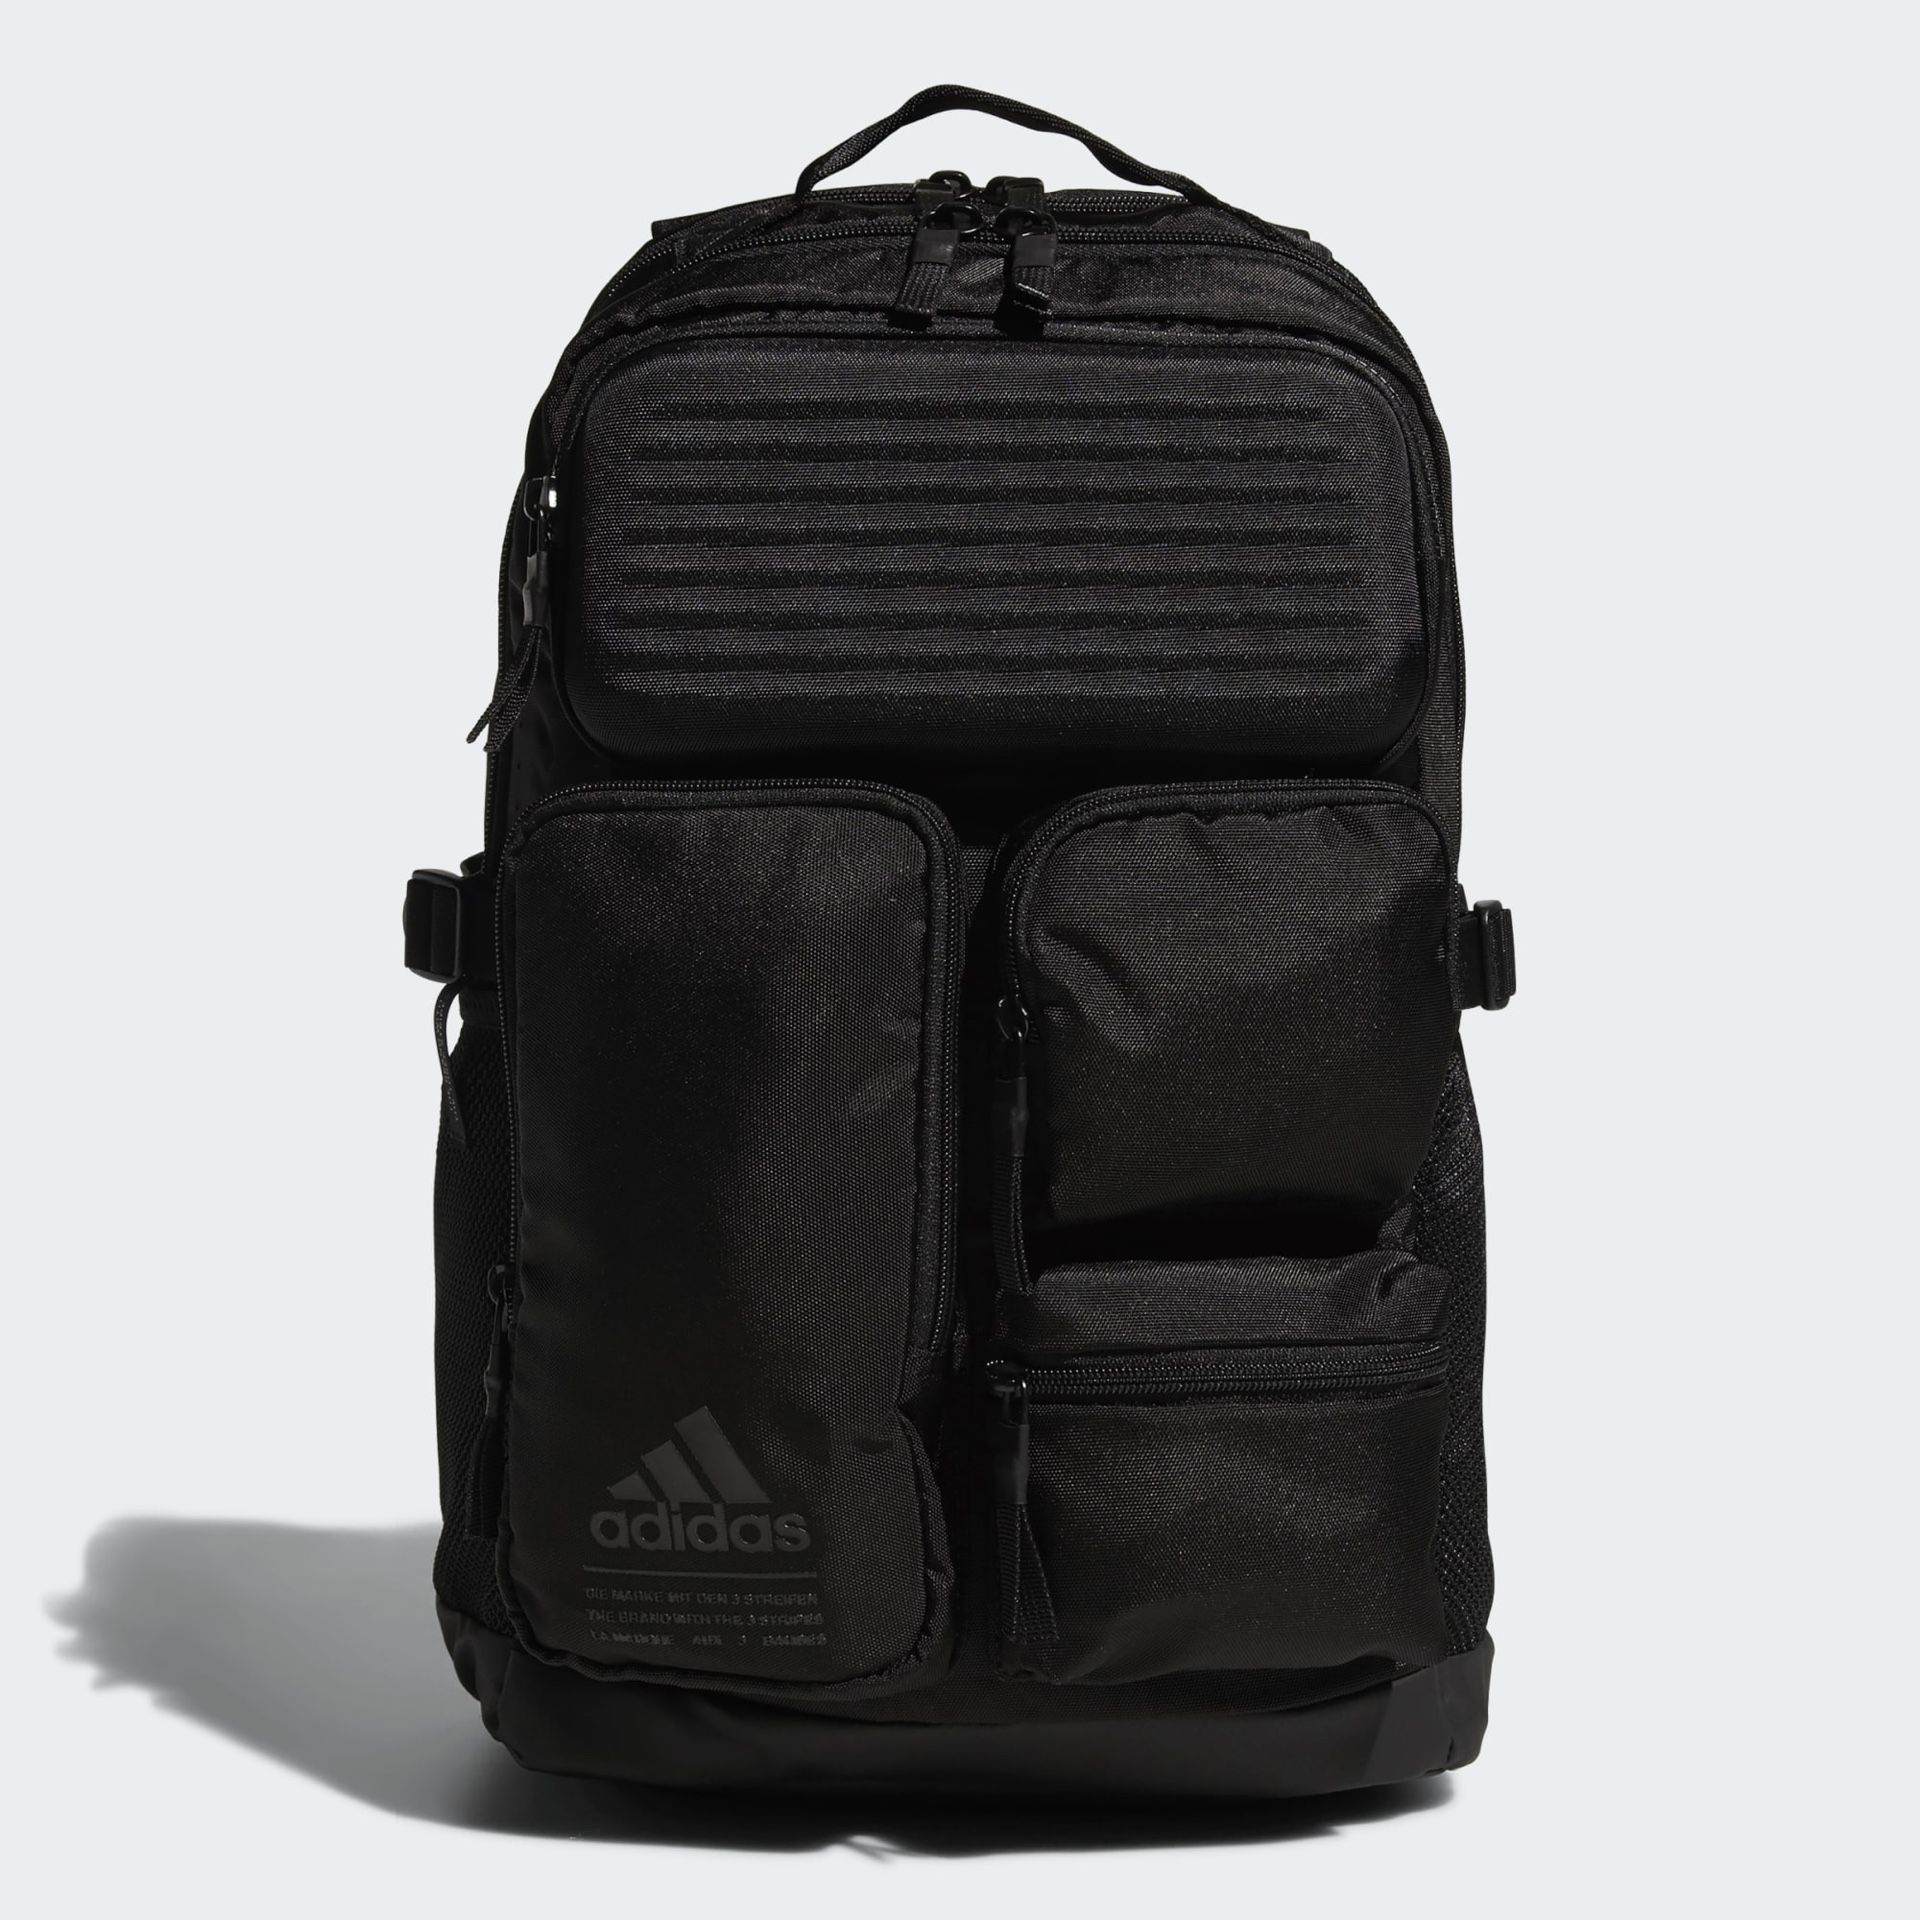 Adidas All Roads Backpack